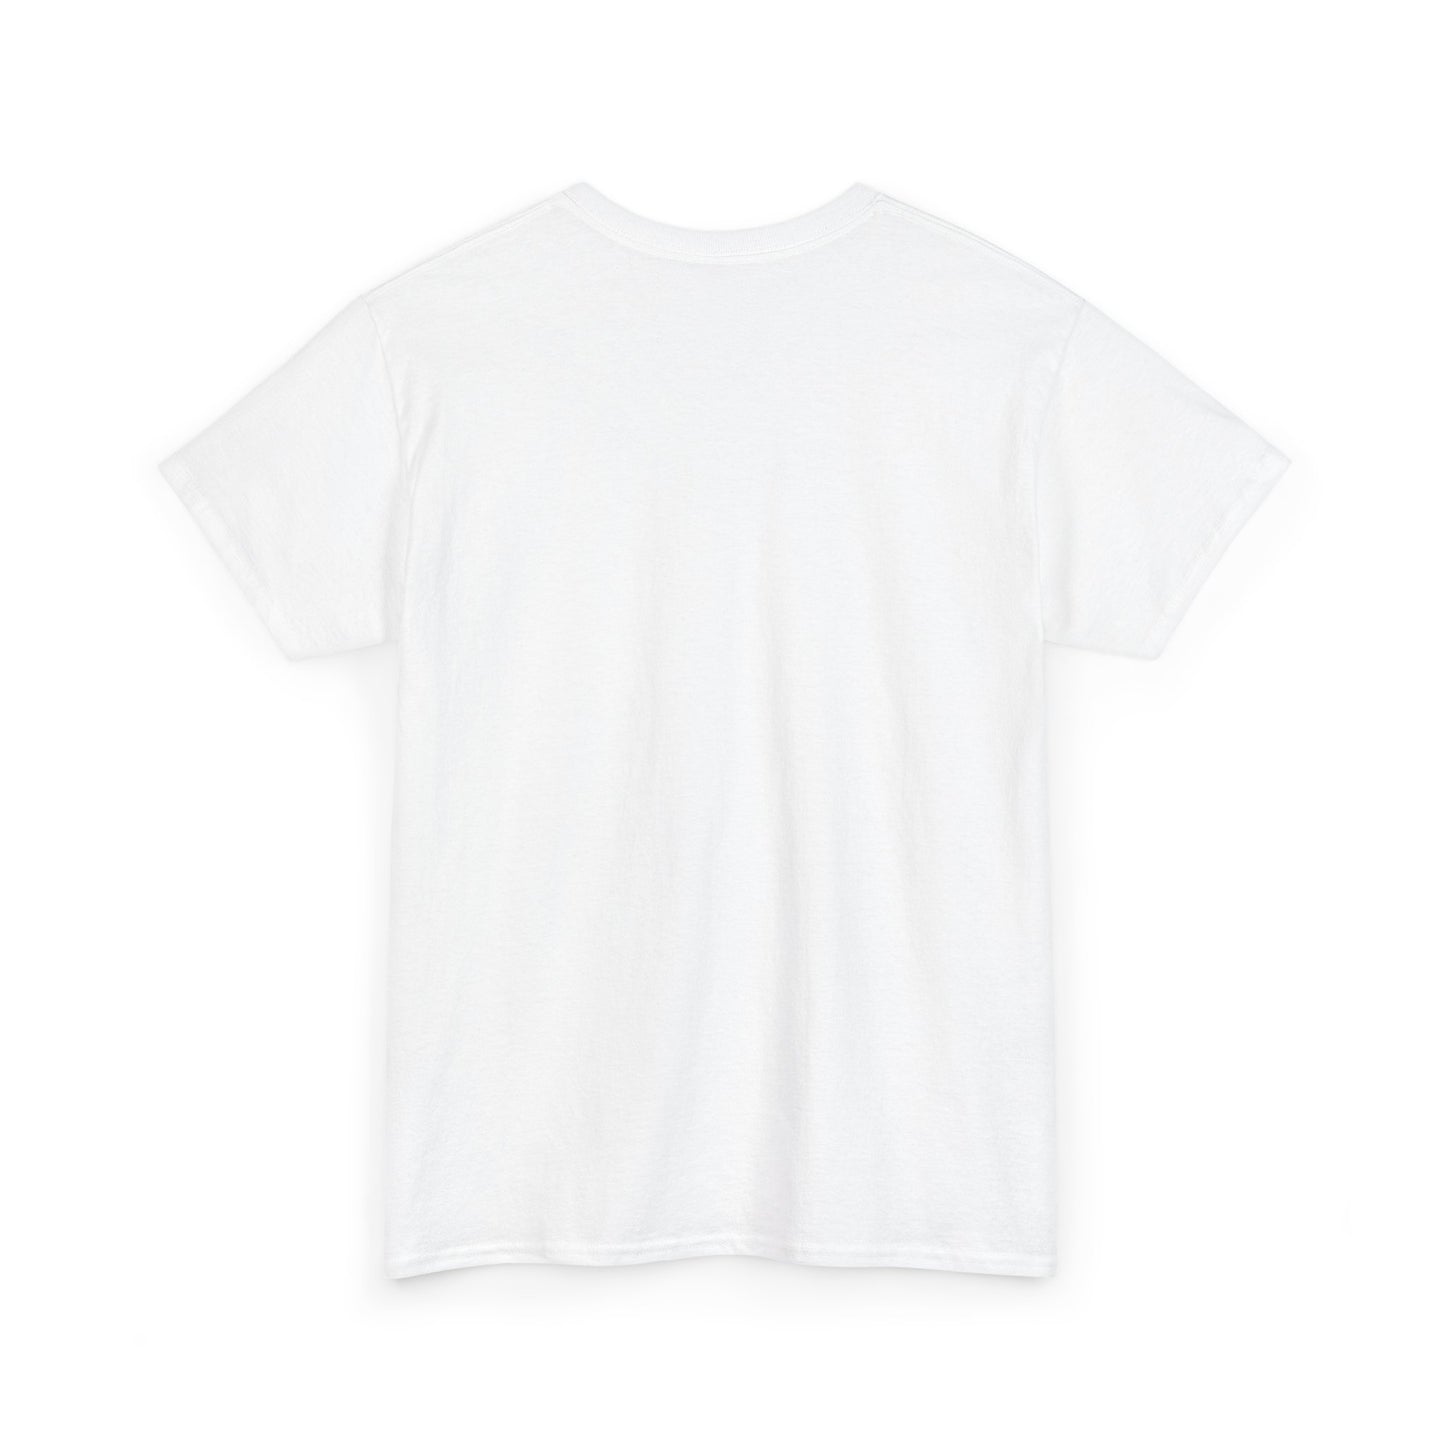 Unisex Heavy Cotton Graphic Design (Wicked) T-shirt